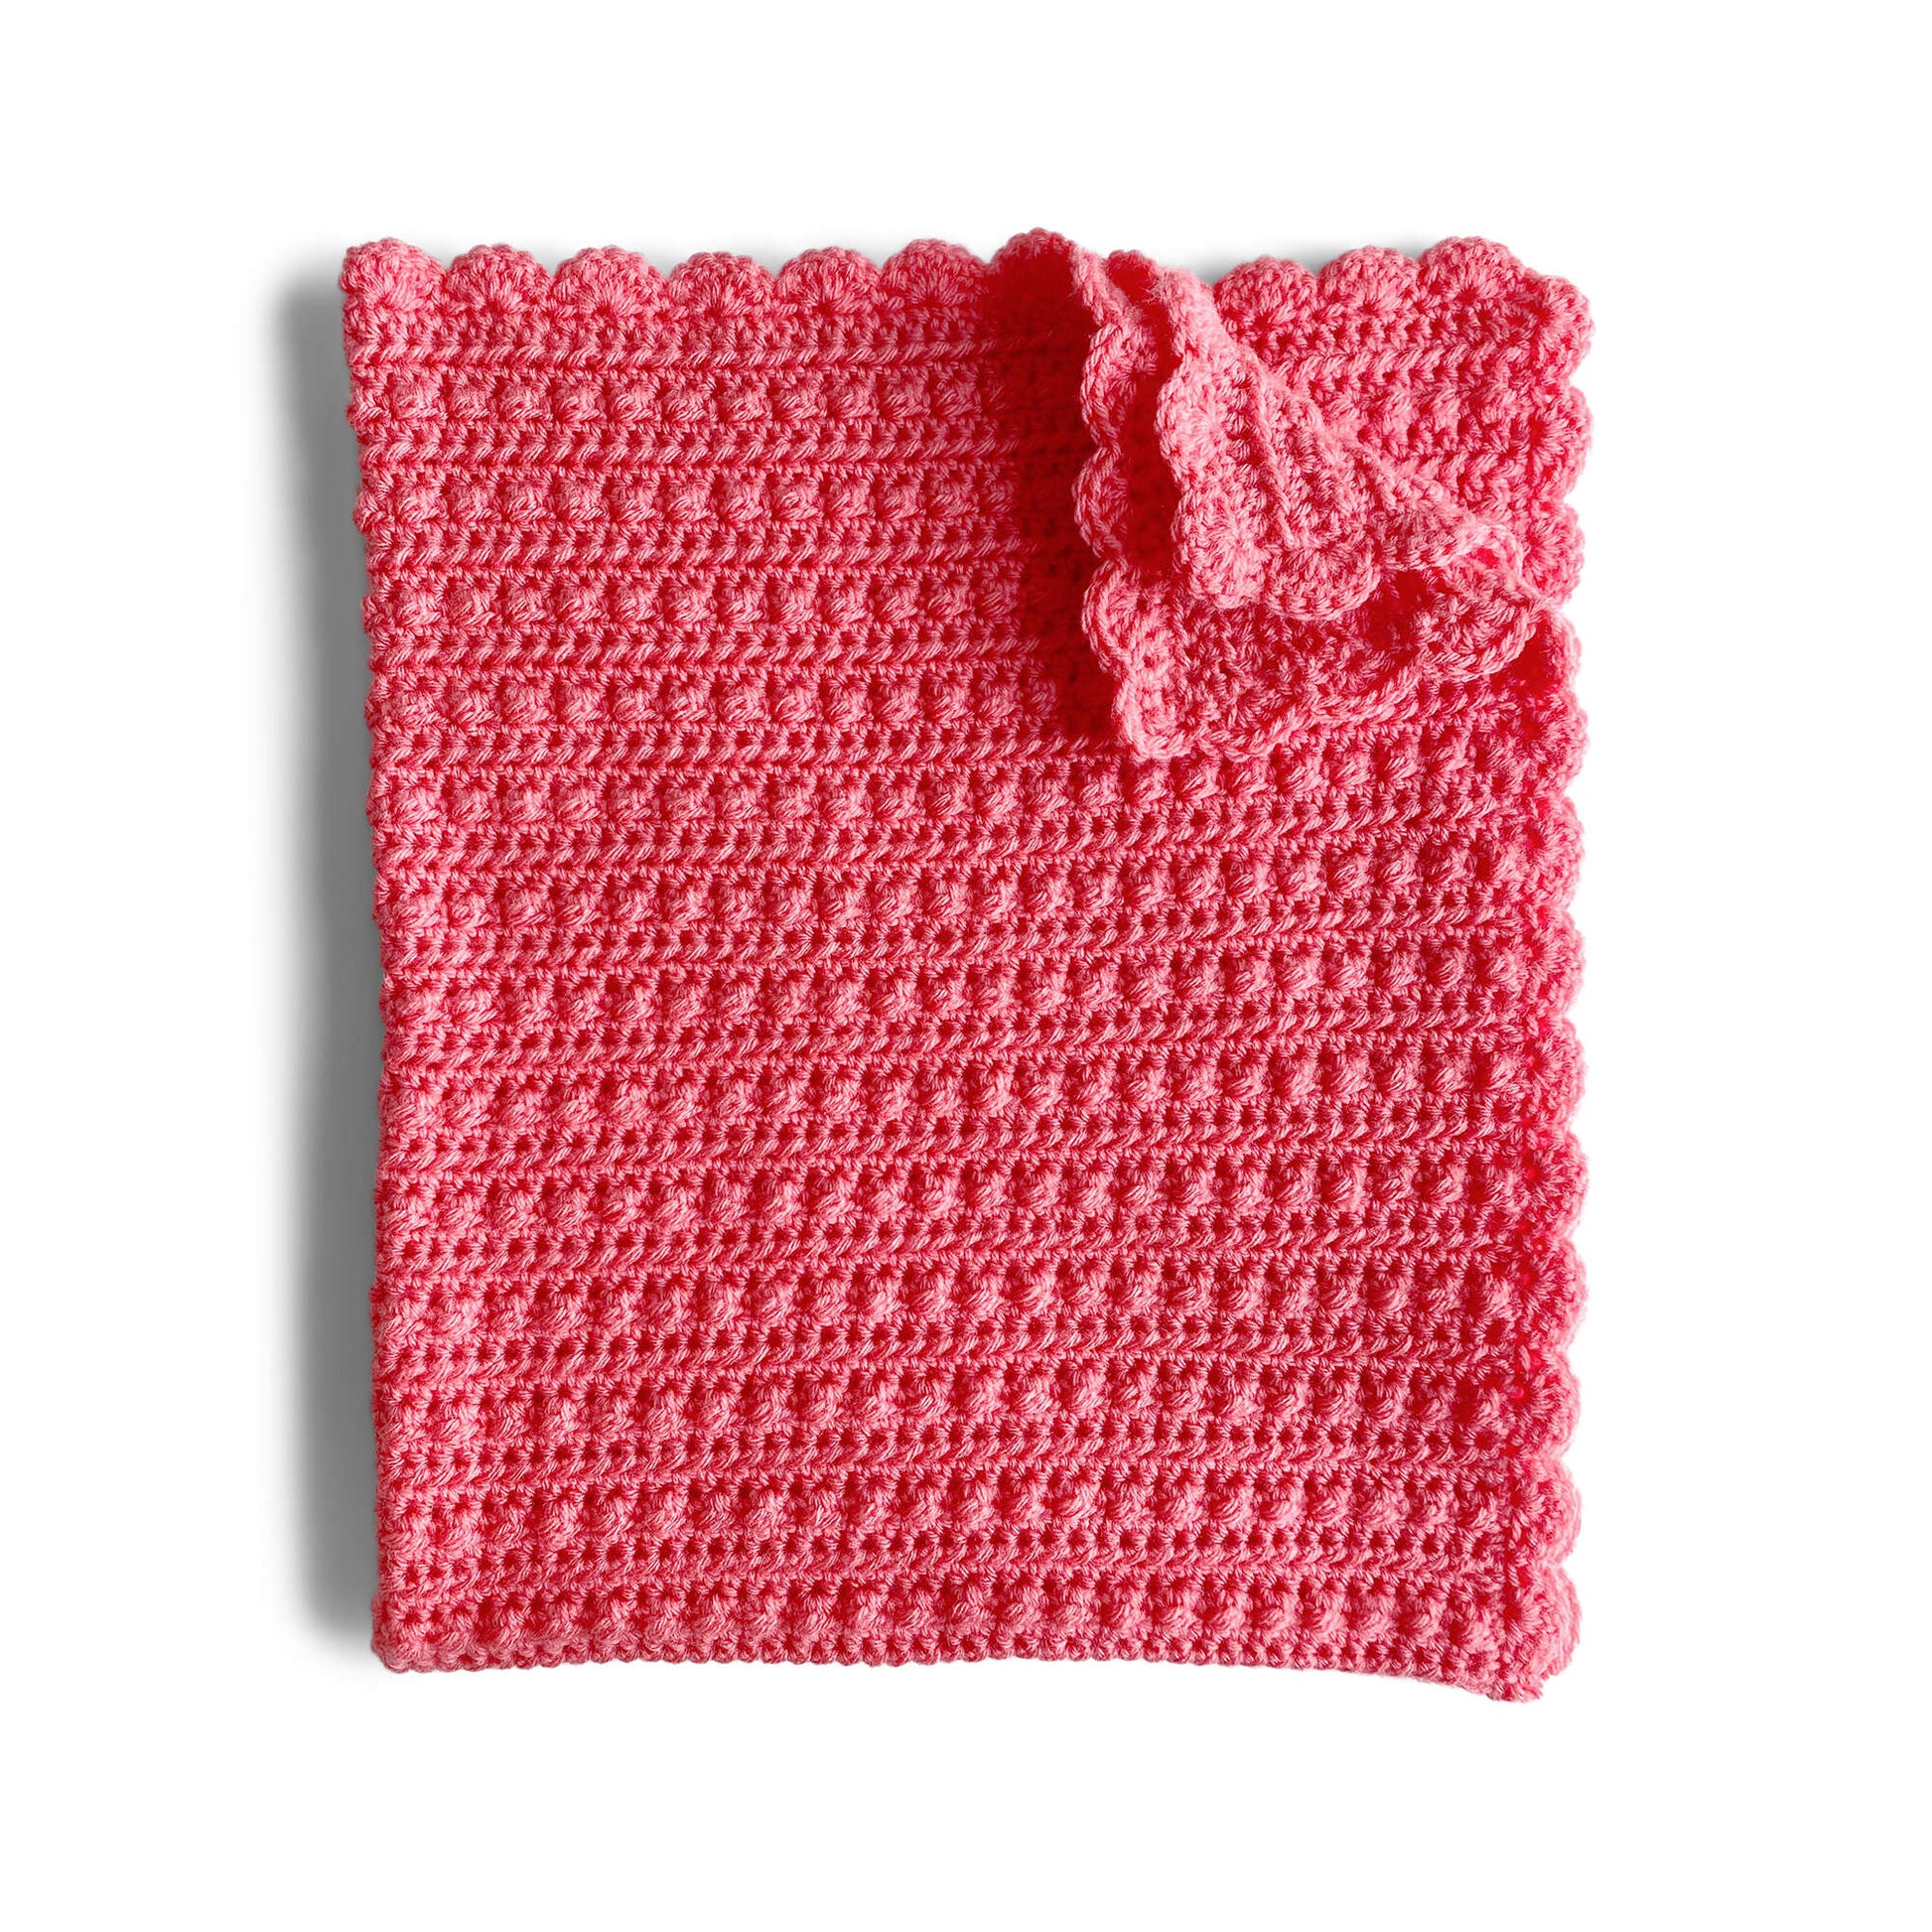 Easy Crochet Baby Blanket Pattern (Perfect For Beginners) - Daisy